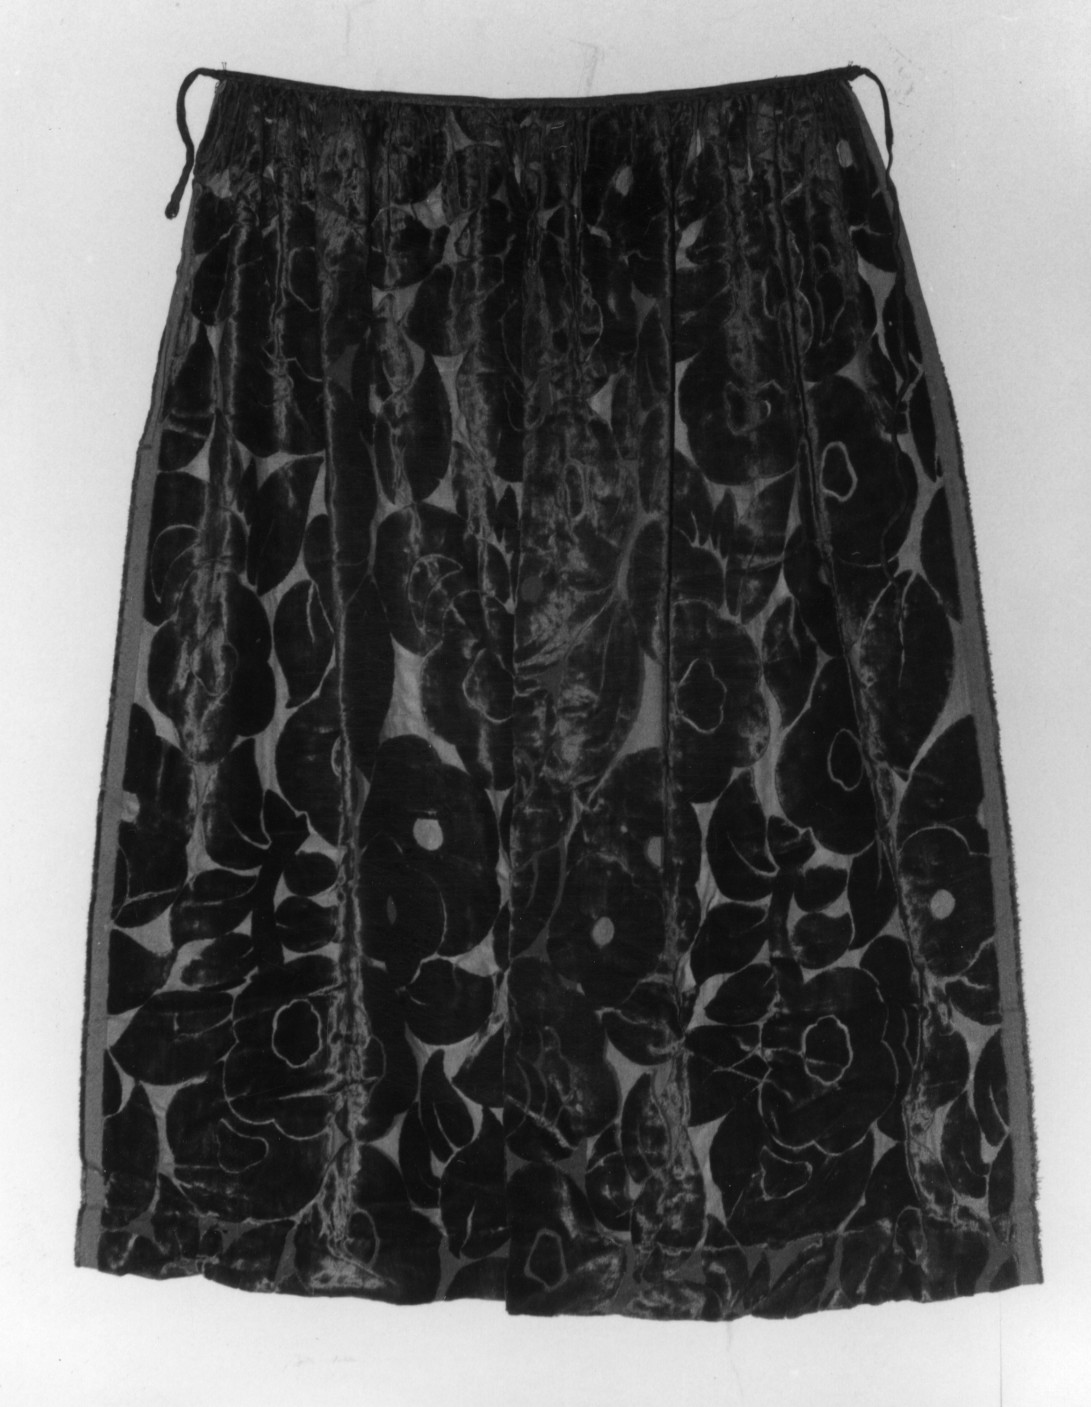 grembiule, costume femminile - manifattura sarda (sec. XIX)